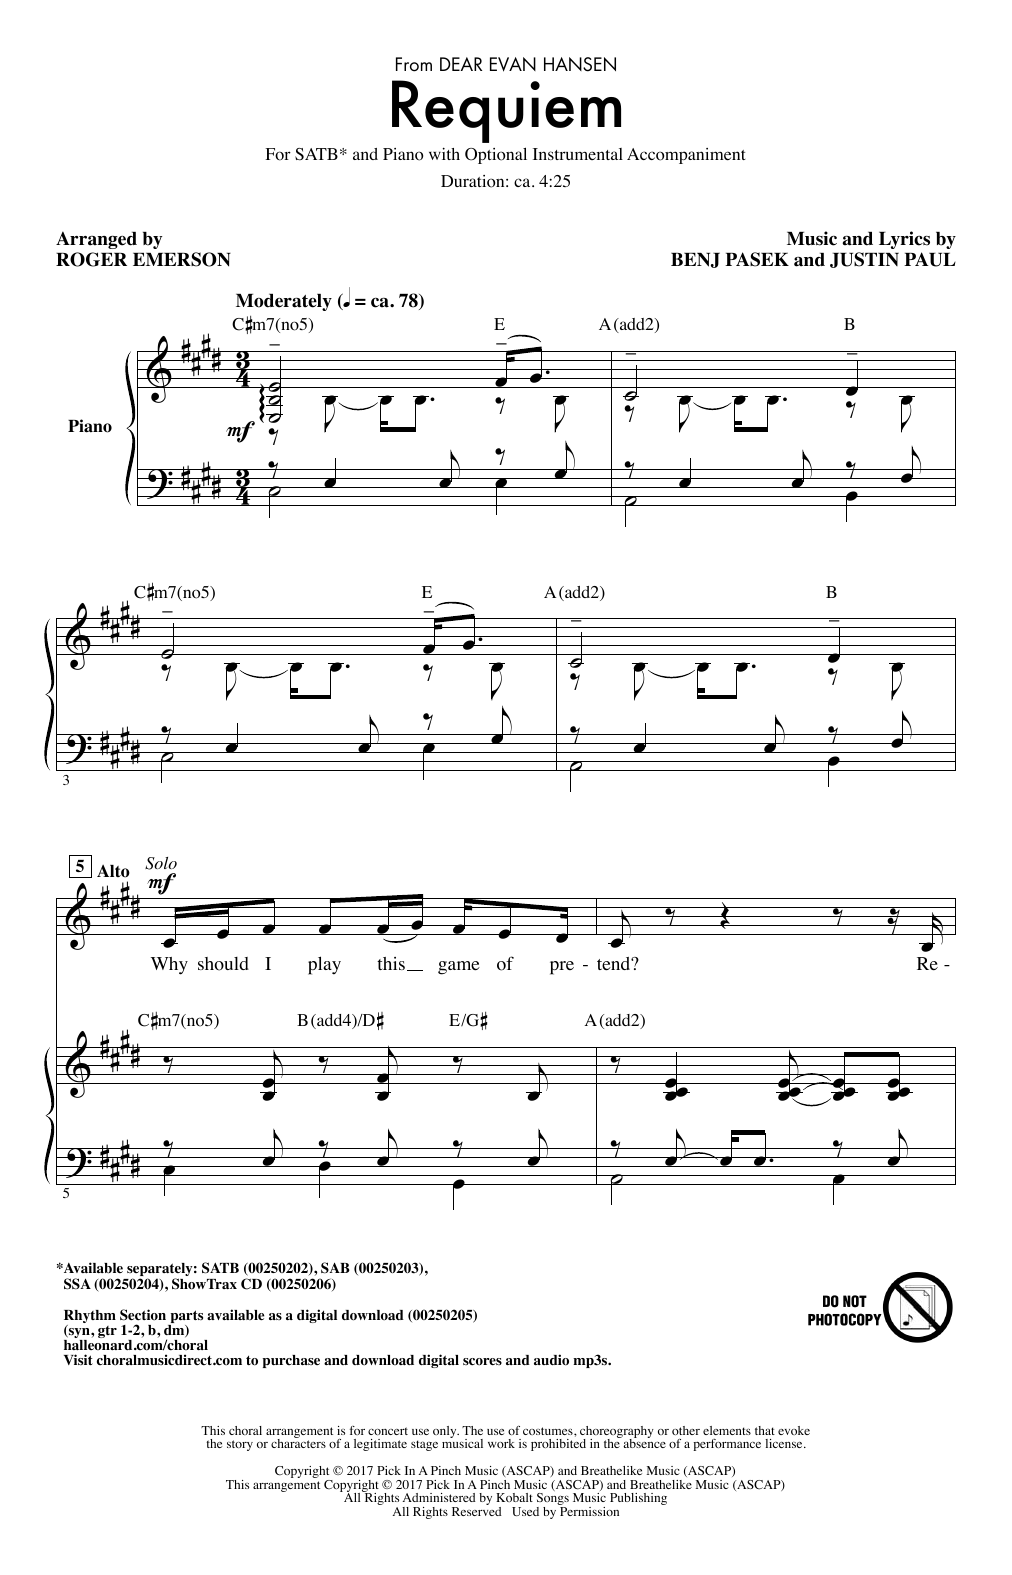 Pasek & Paul Requiem (from Dear Evan Hansen) (arr. Roger Emerson) Sheet Music Notes & Chords for SAB - Download or Print PDF